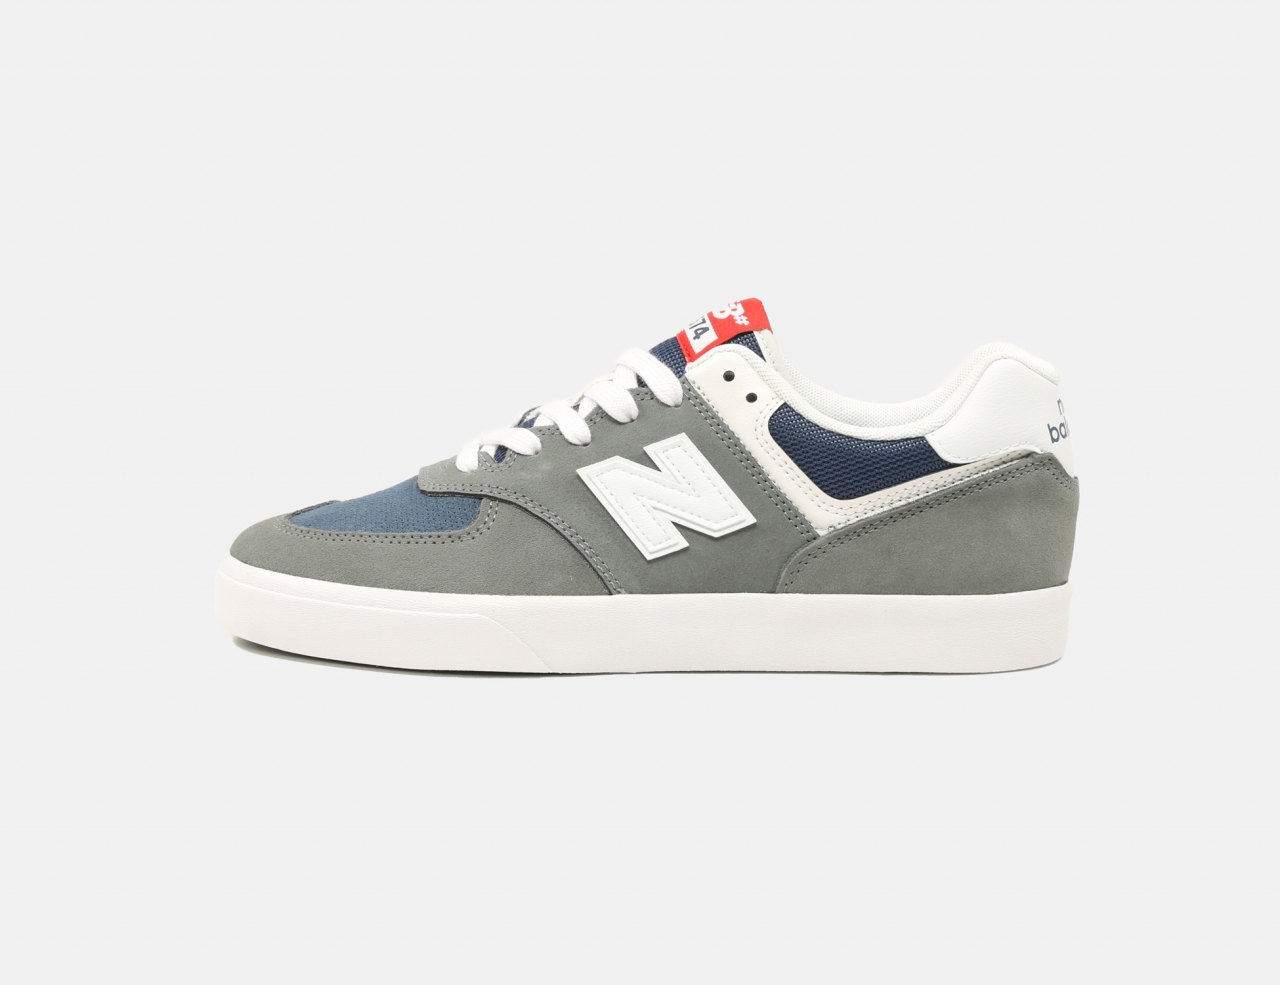 New Balance Numeric 574 Vulc Sneaker - Grey / White